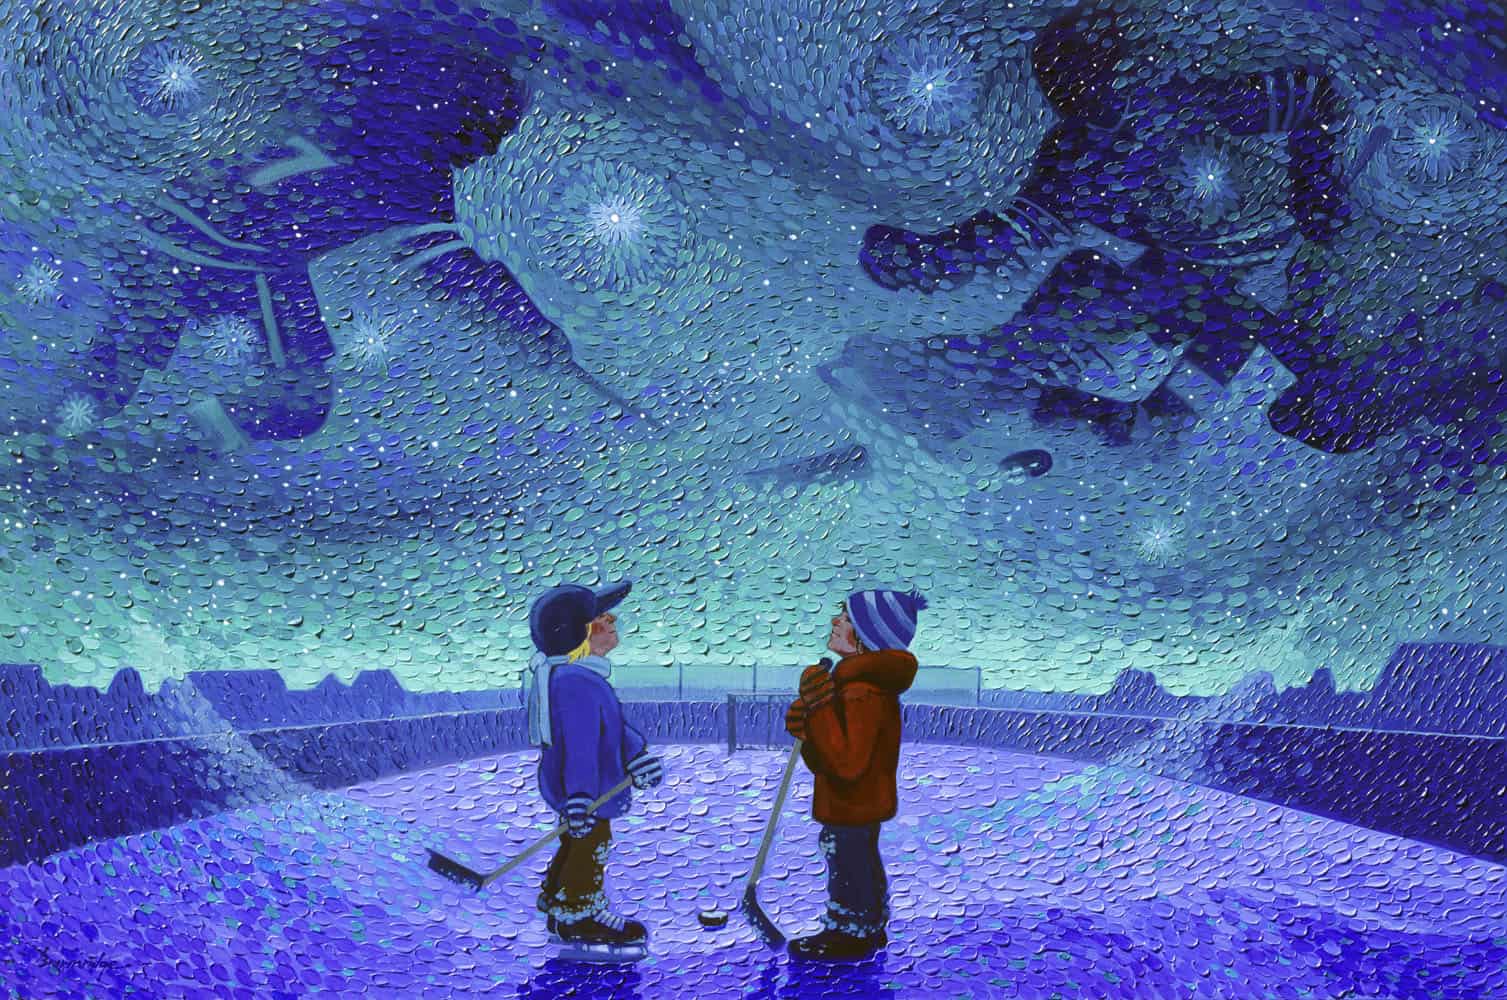 Dreaming of Stars by Bill Brownridge